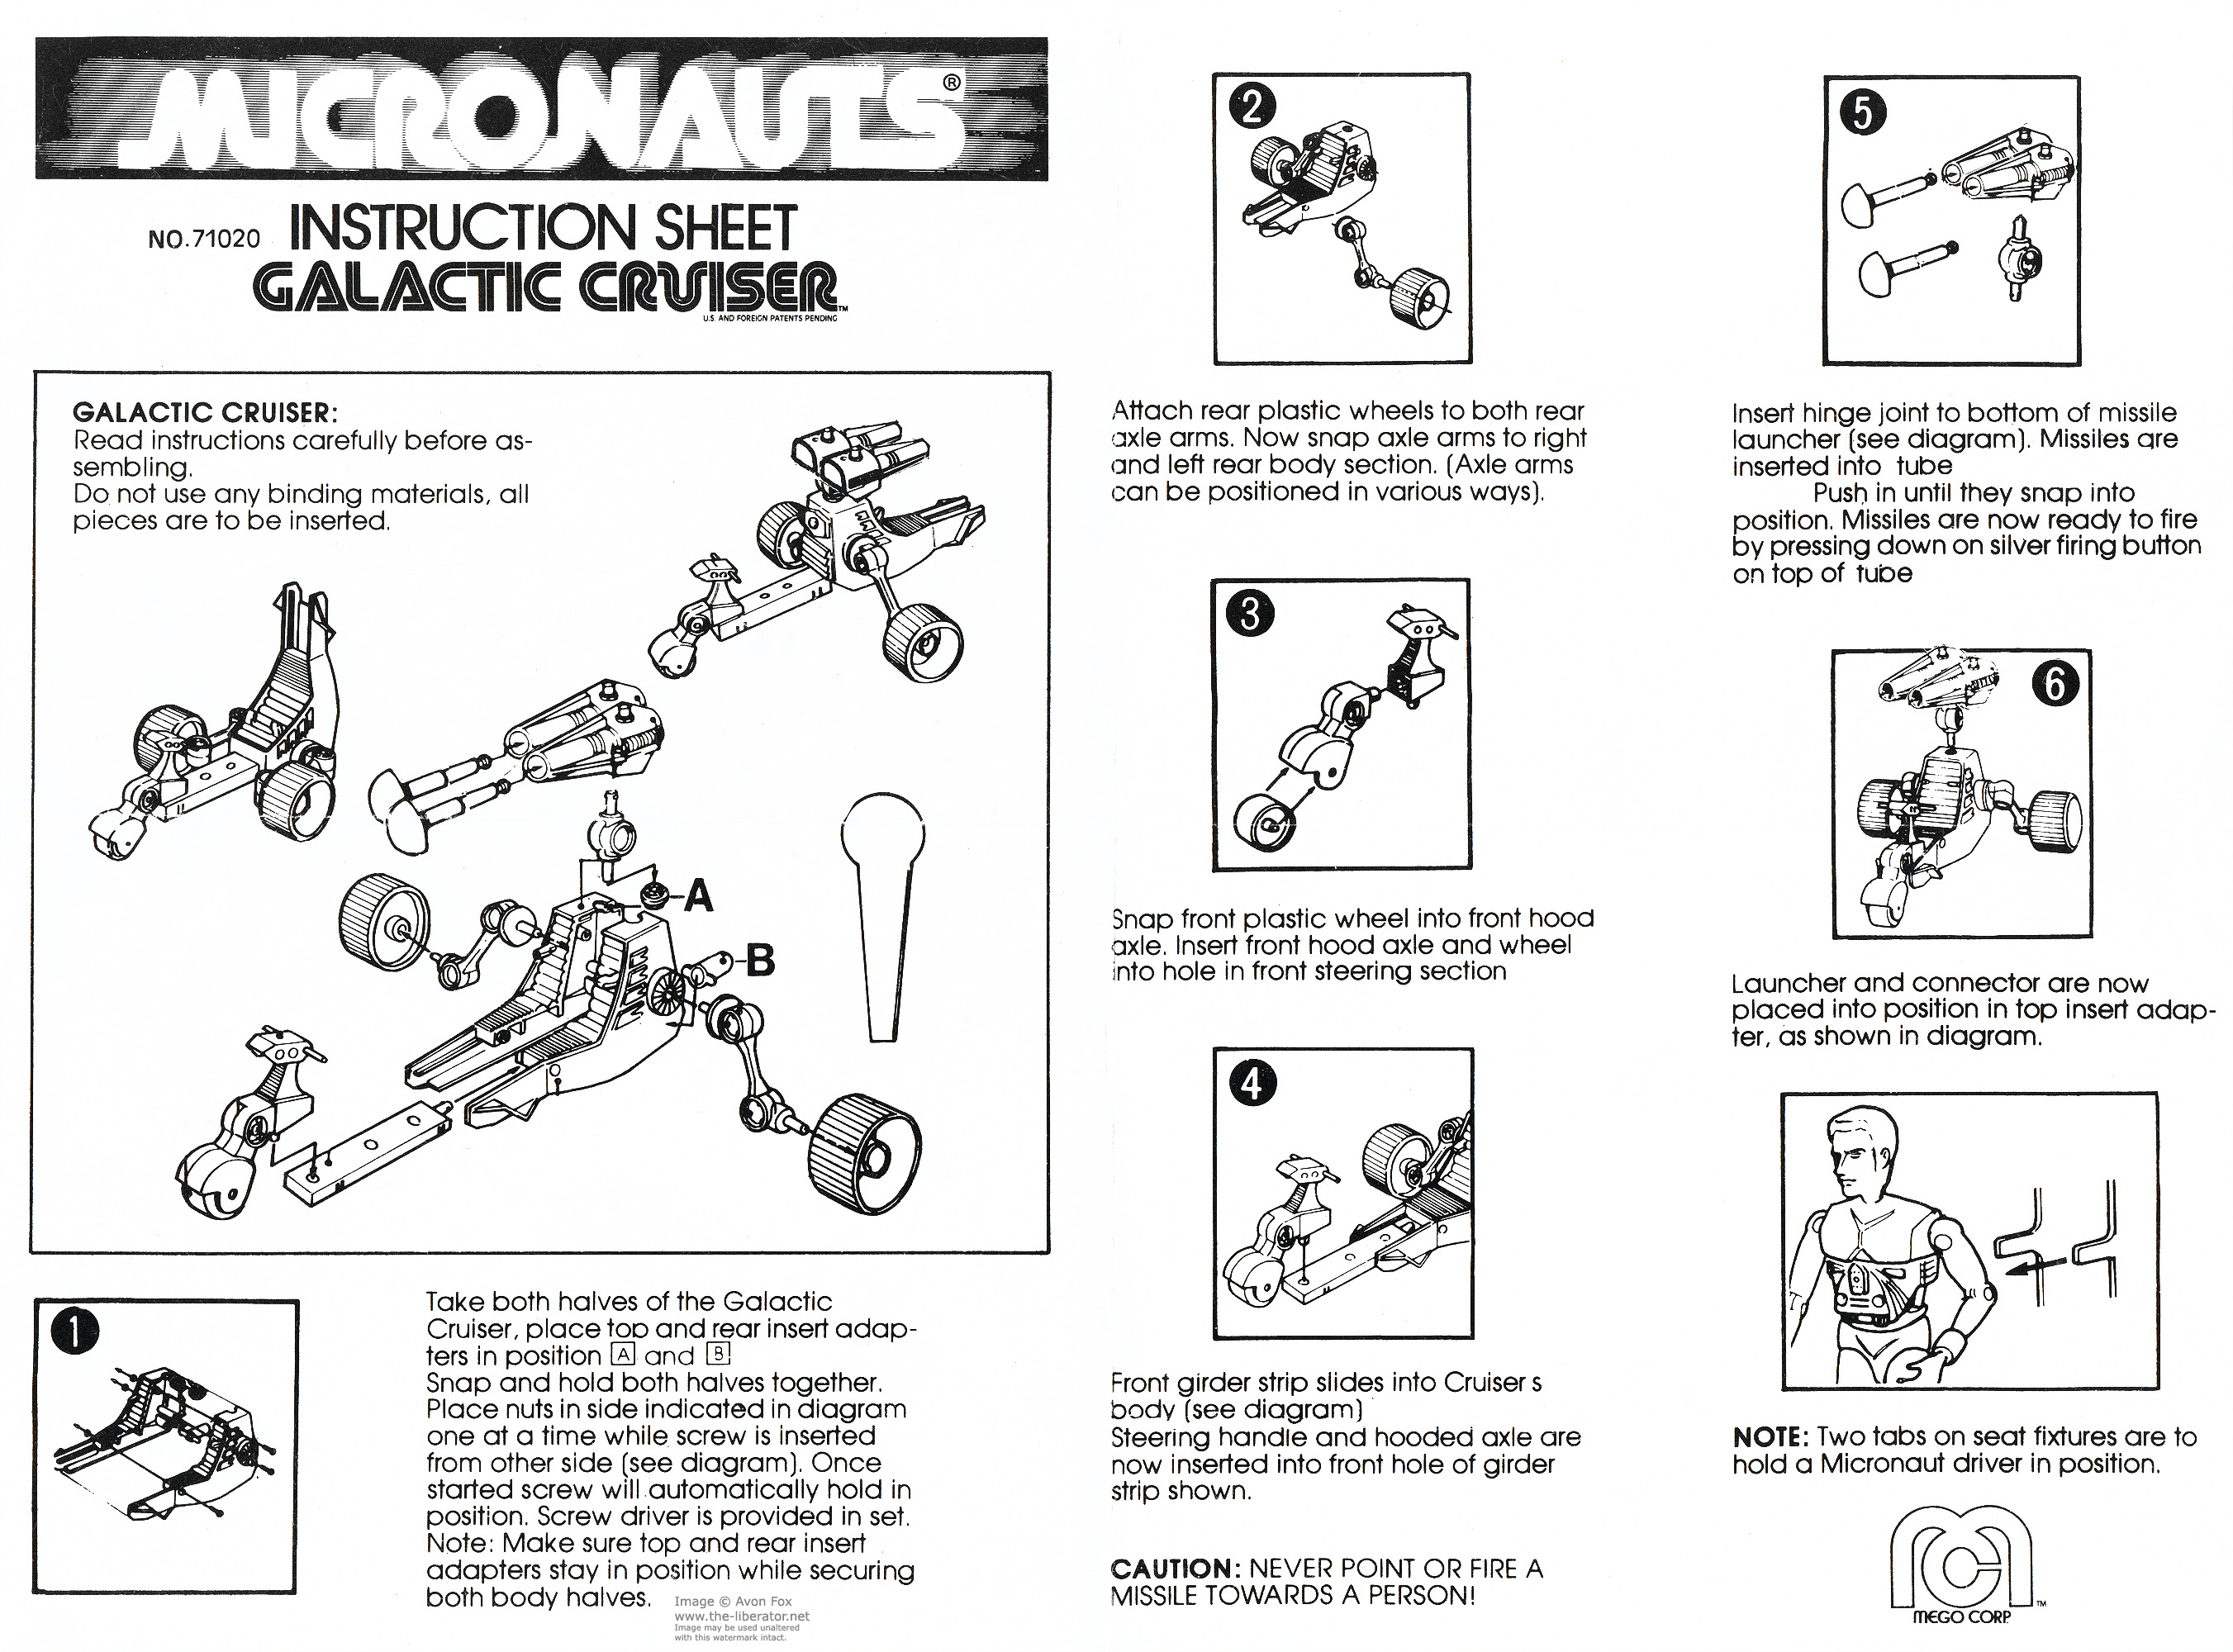 Galactic Cruiser instructions